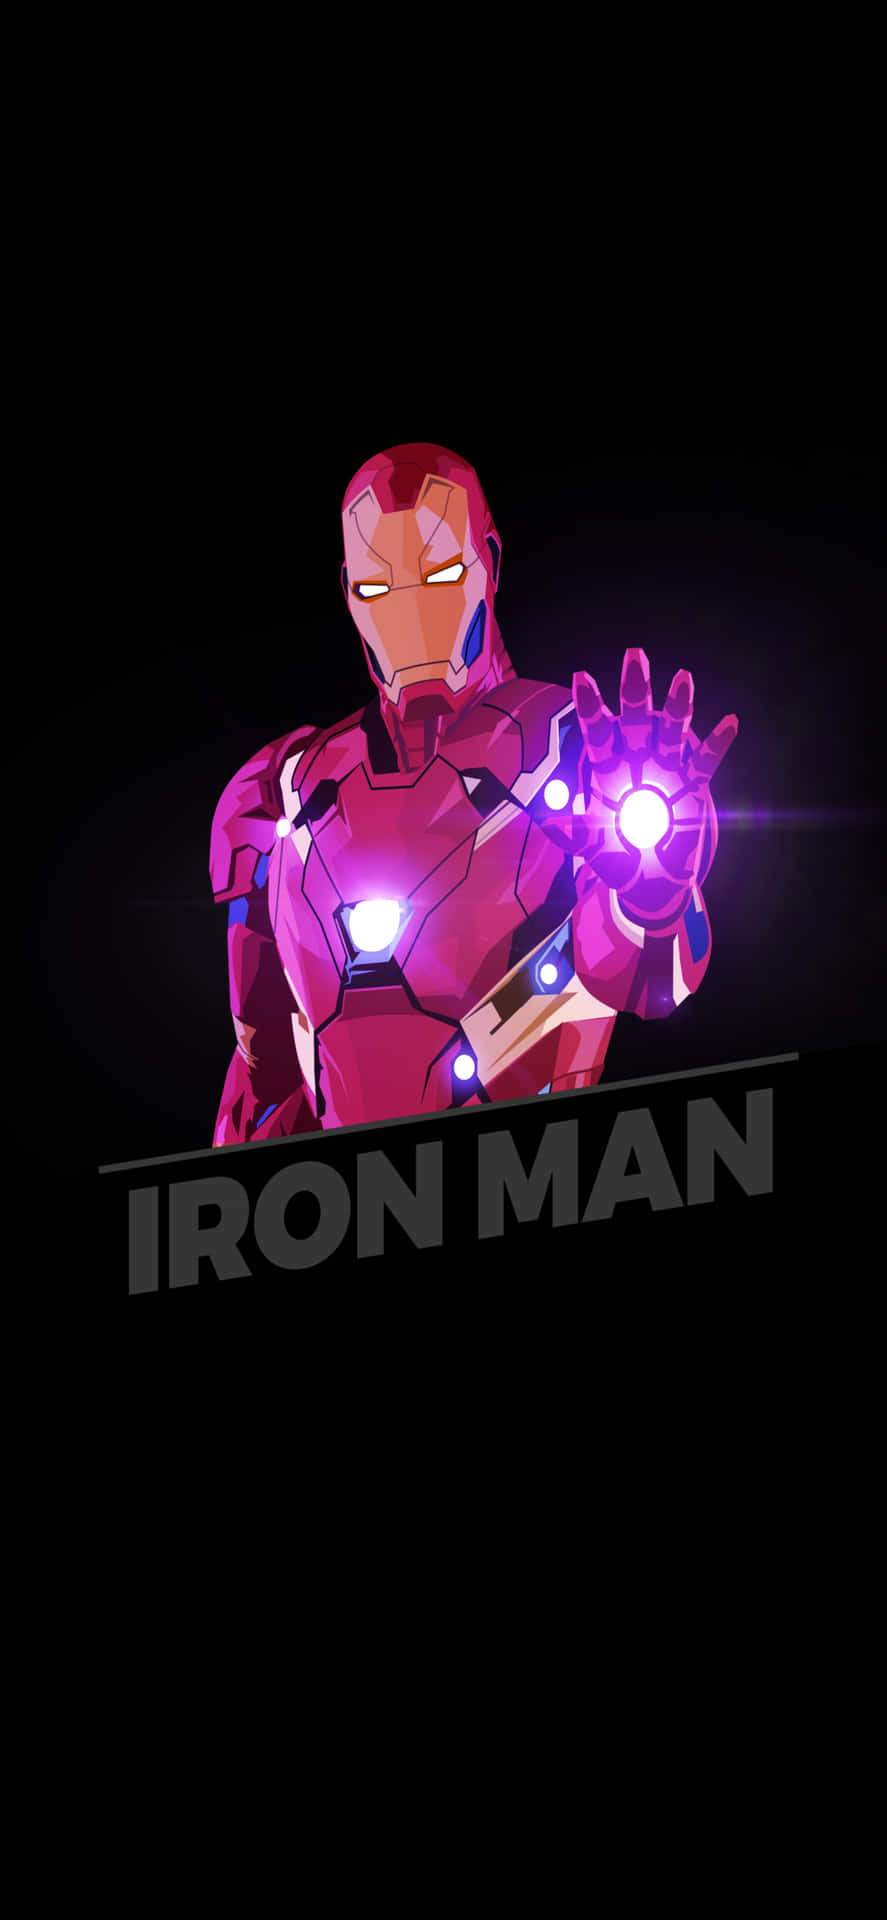 Iphonex Bakgrundsbild Med Iron Man I Lila Belysning.